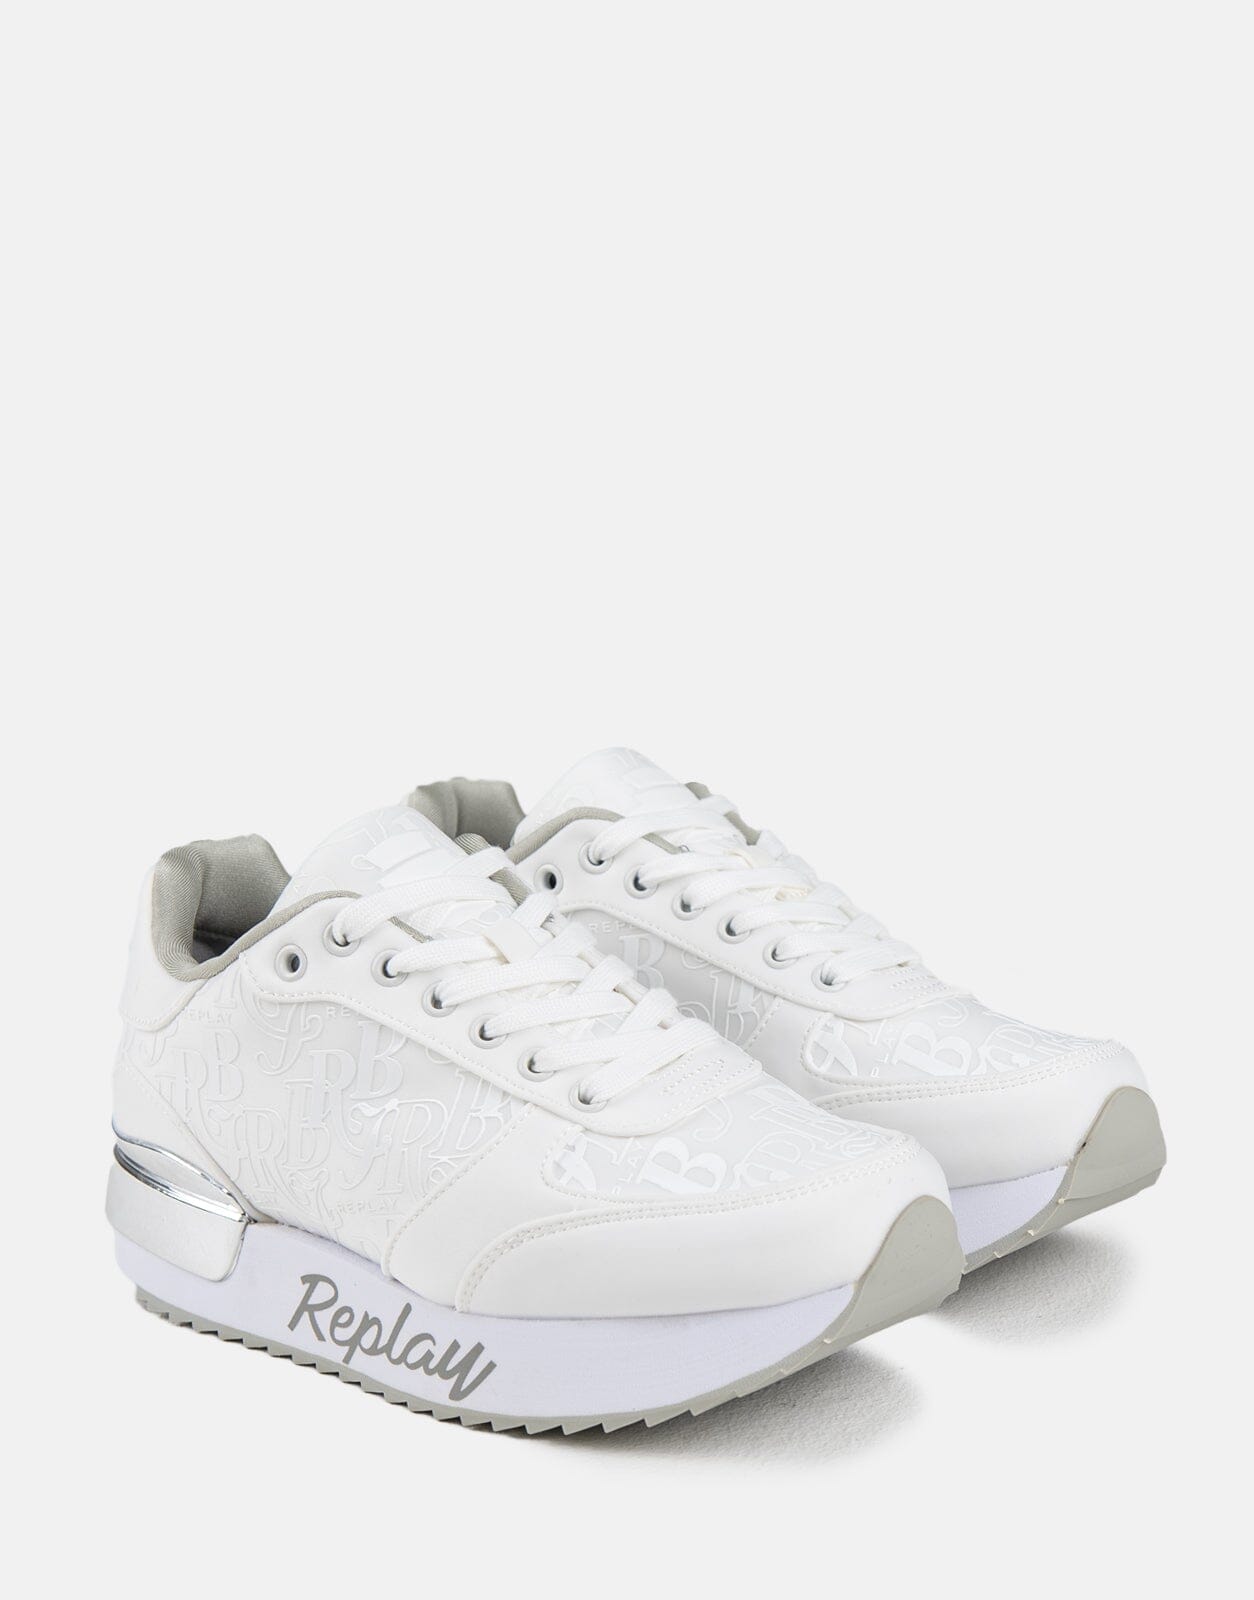 Replay Penny RBJ White Sneakers - Subwear